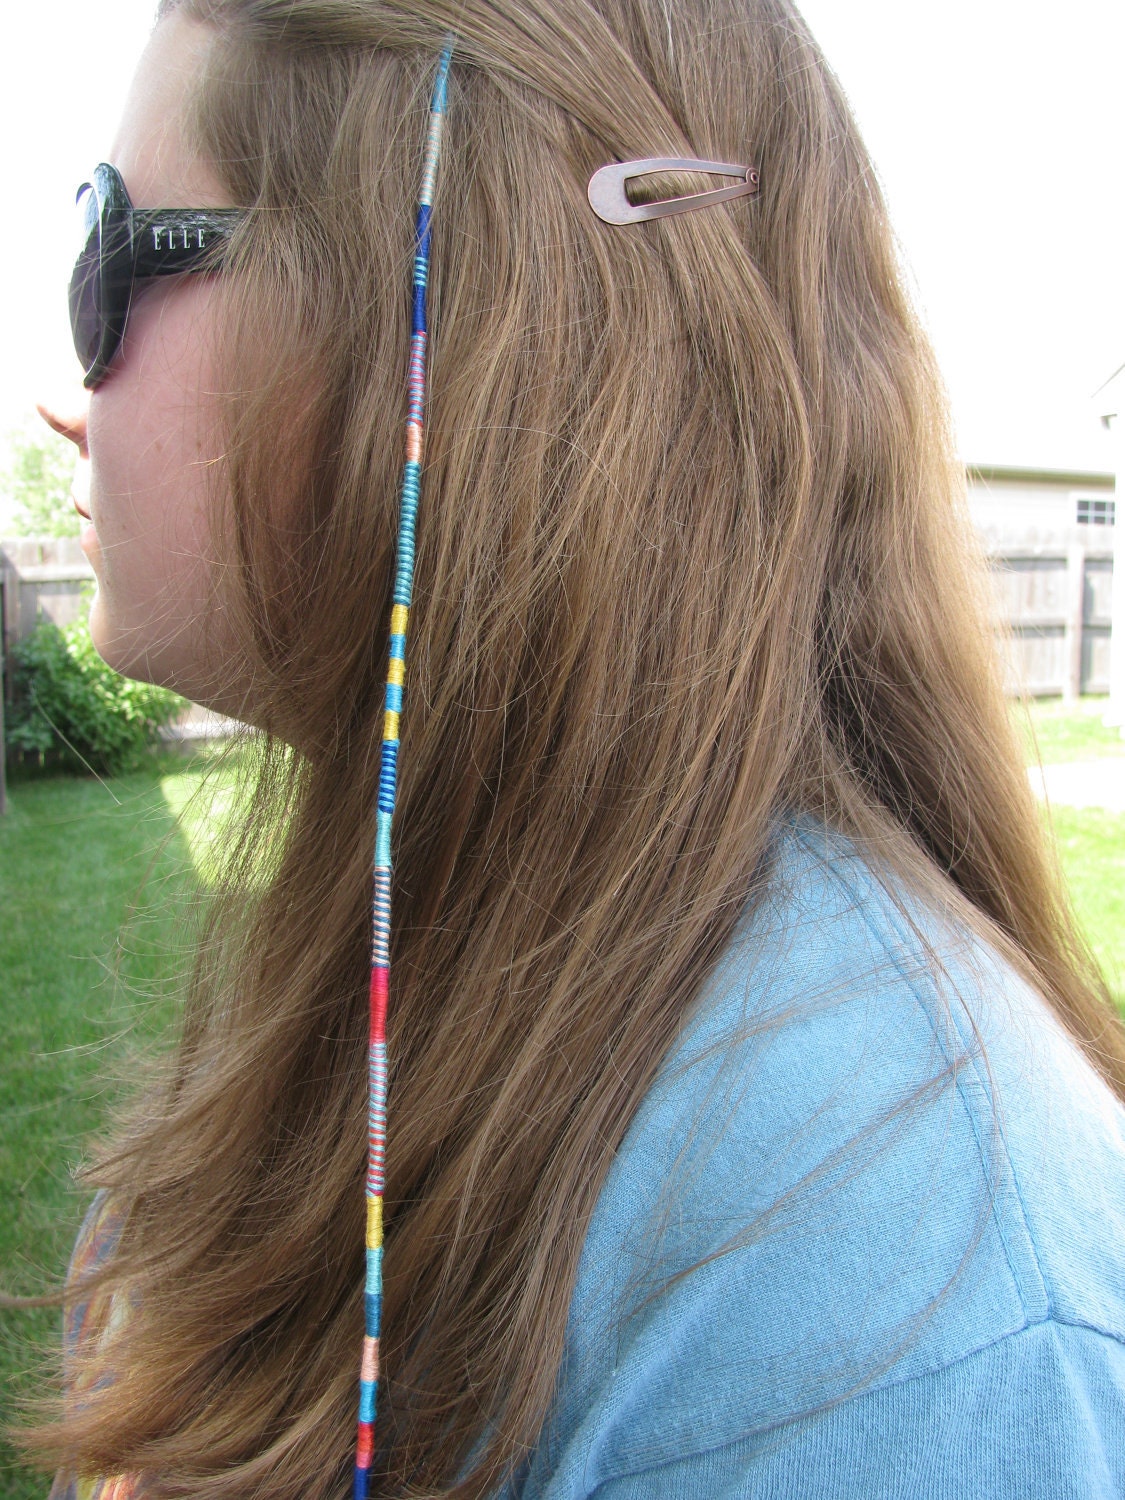 Summer hair wrap Surfside hippie style removable hairwrap